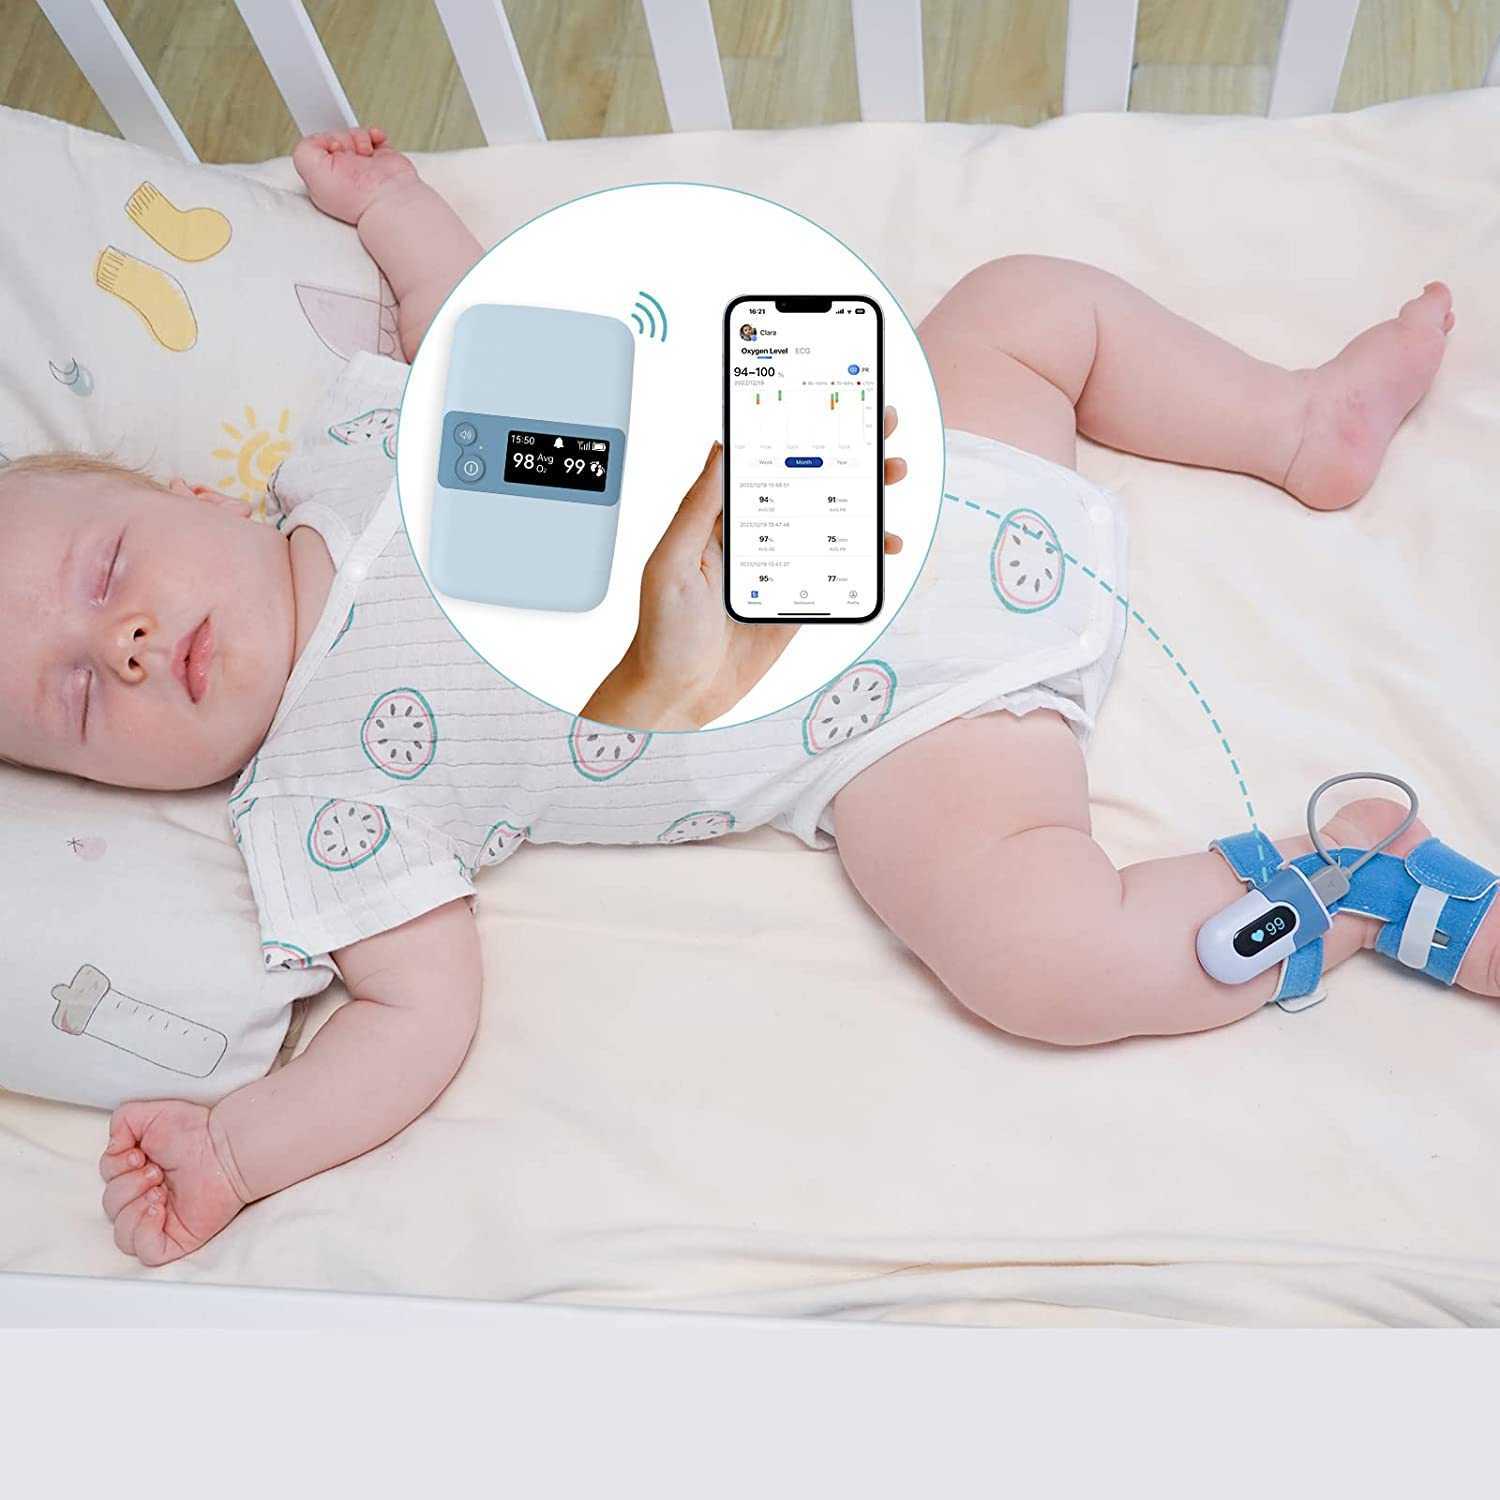 baby sleep monitor track baby's sleep